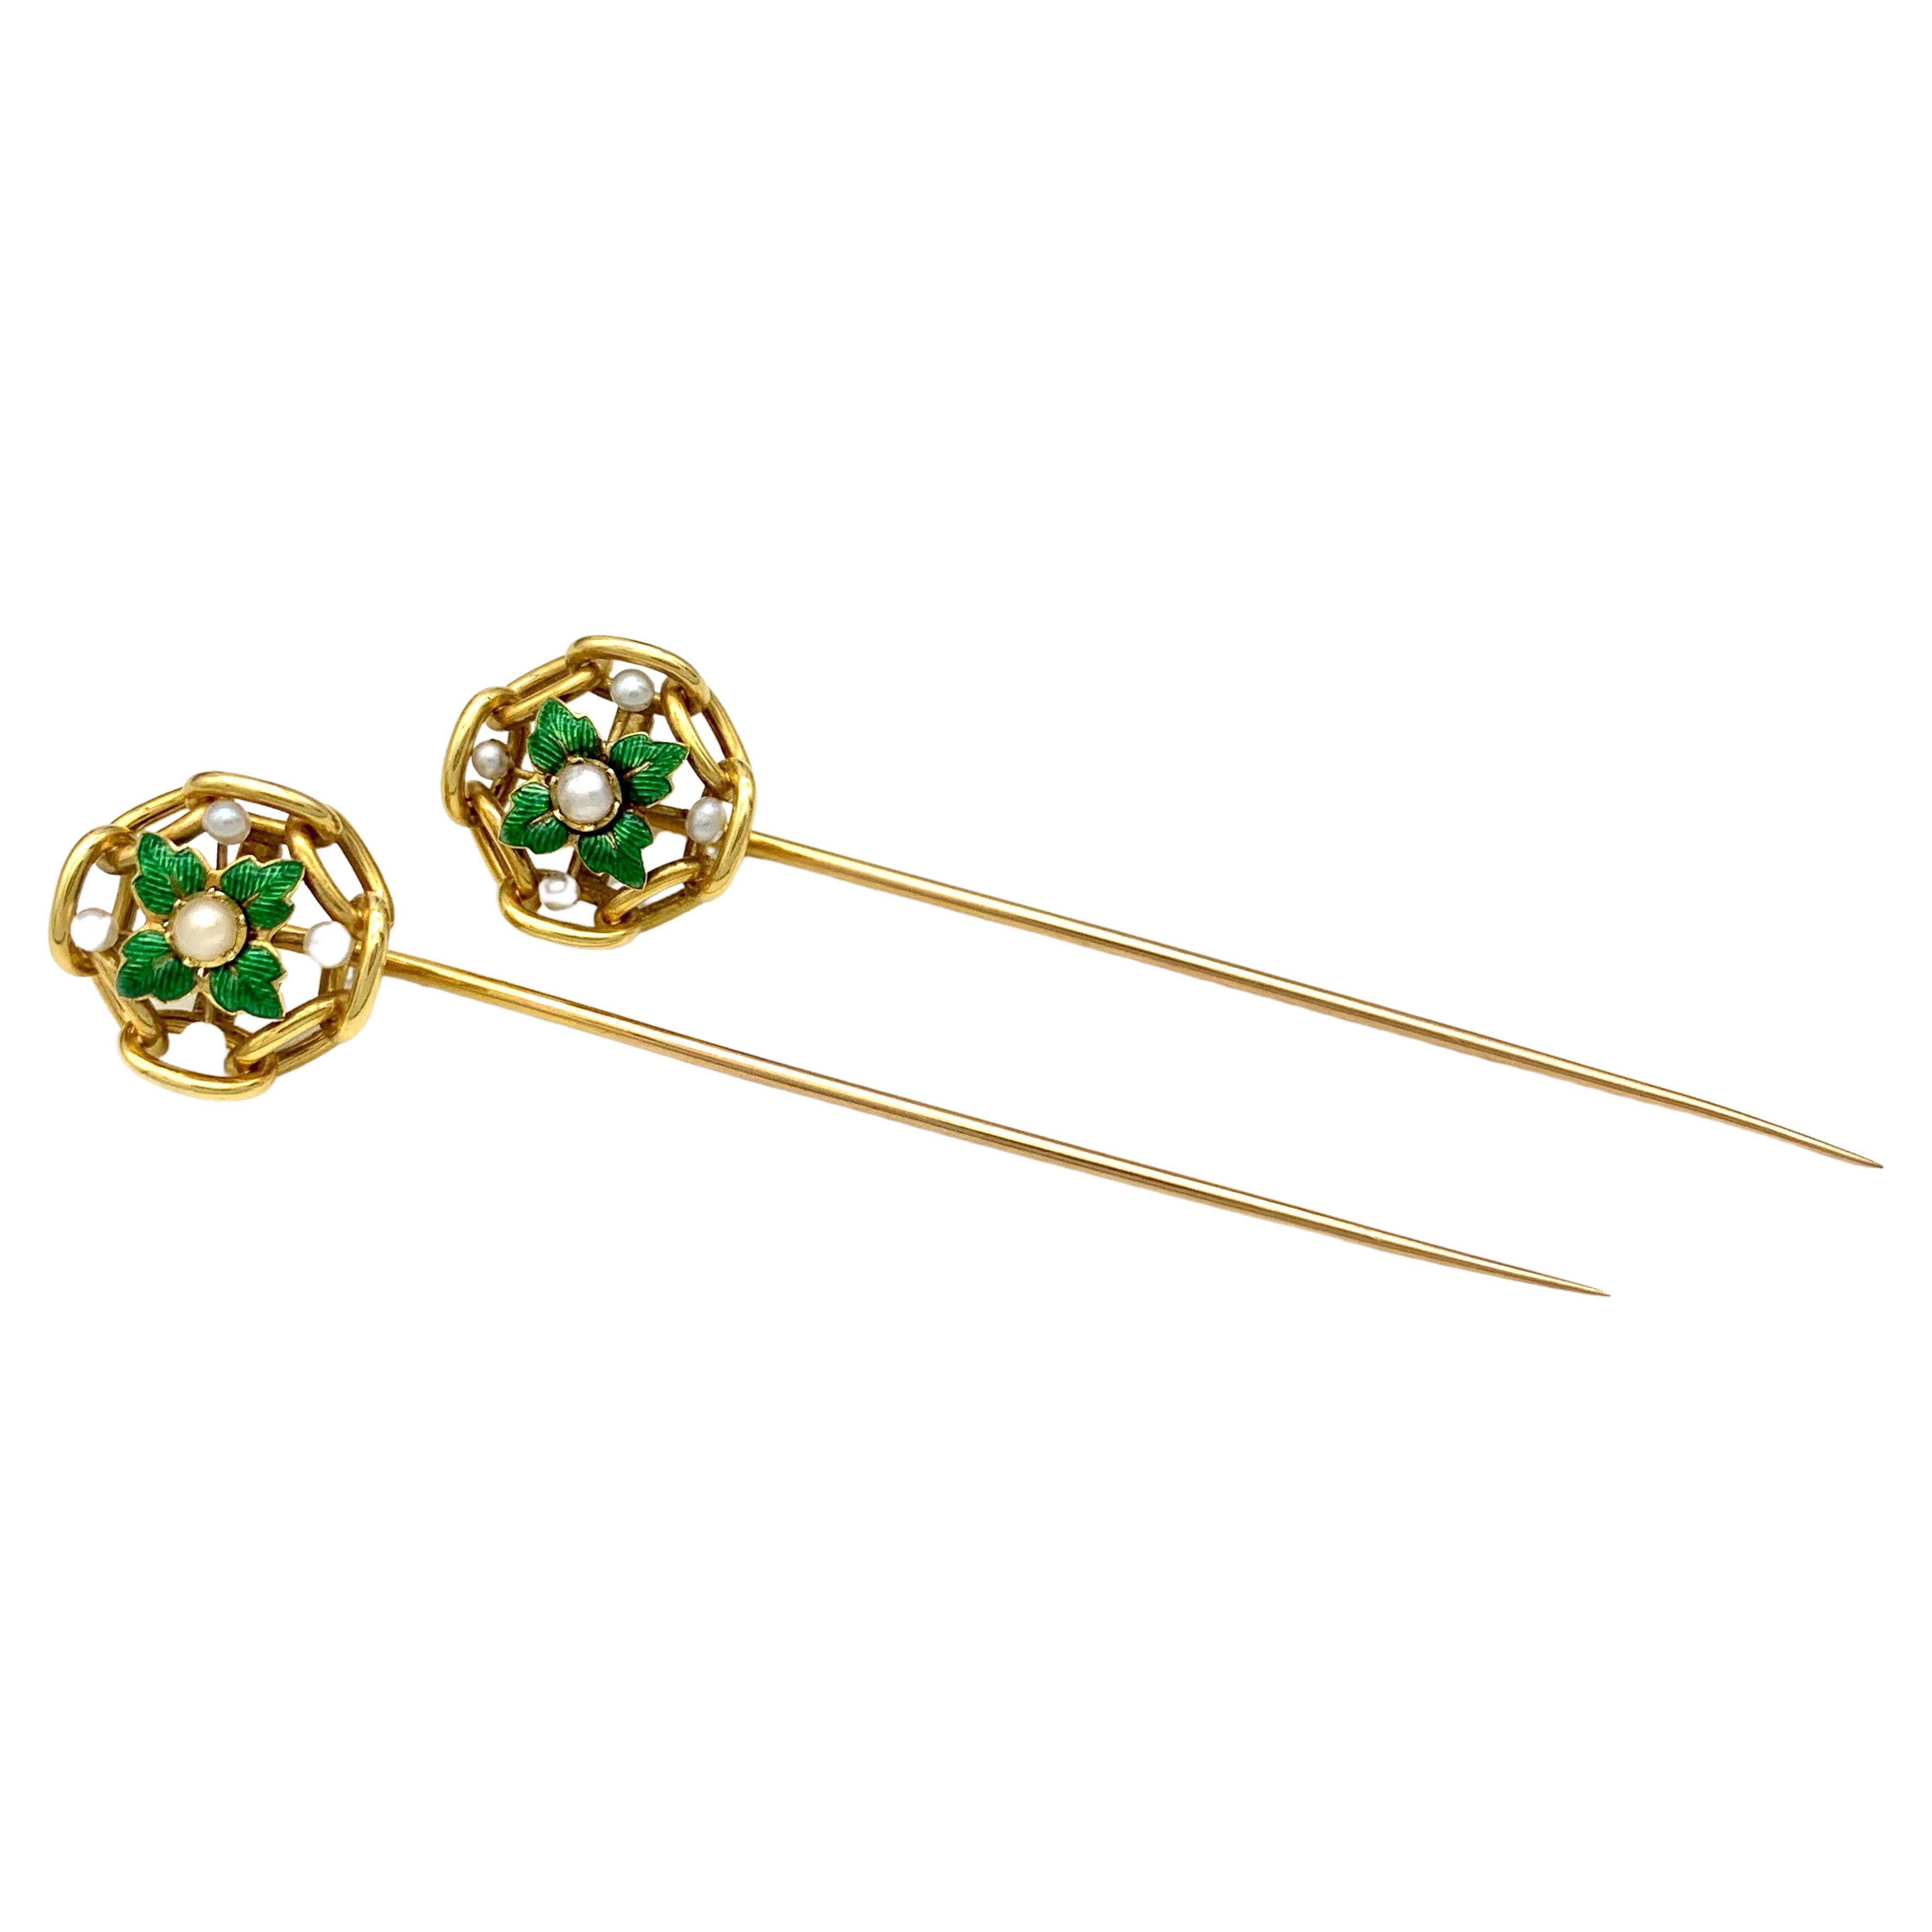 Antique Pair of Stickpins 18 Karat Gold Green Guilloché Enamel Natural Pearls For Sale